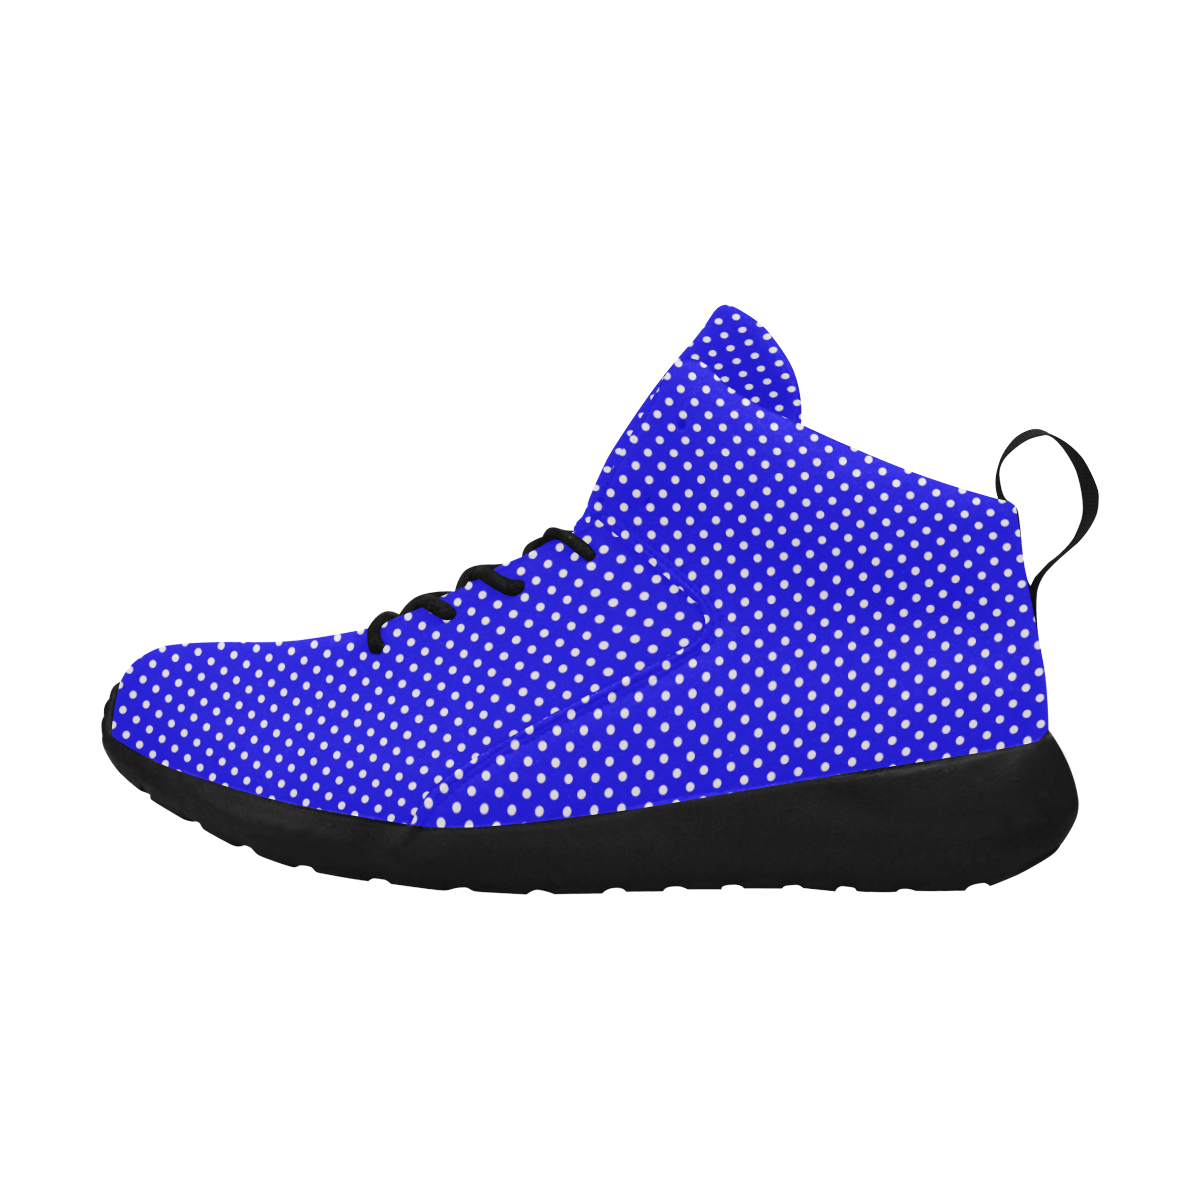 Blue polka dots Women's Chukka Training Shoes/Large Size (Model 57502)